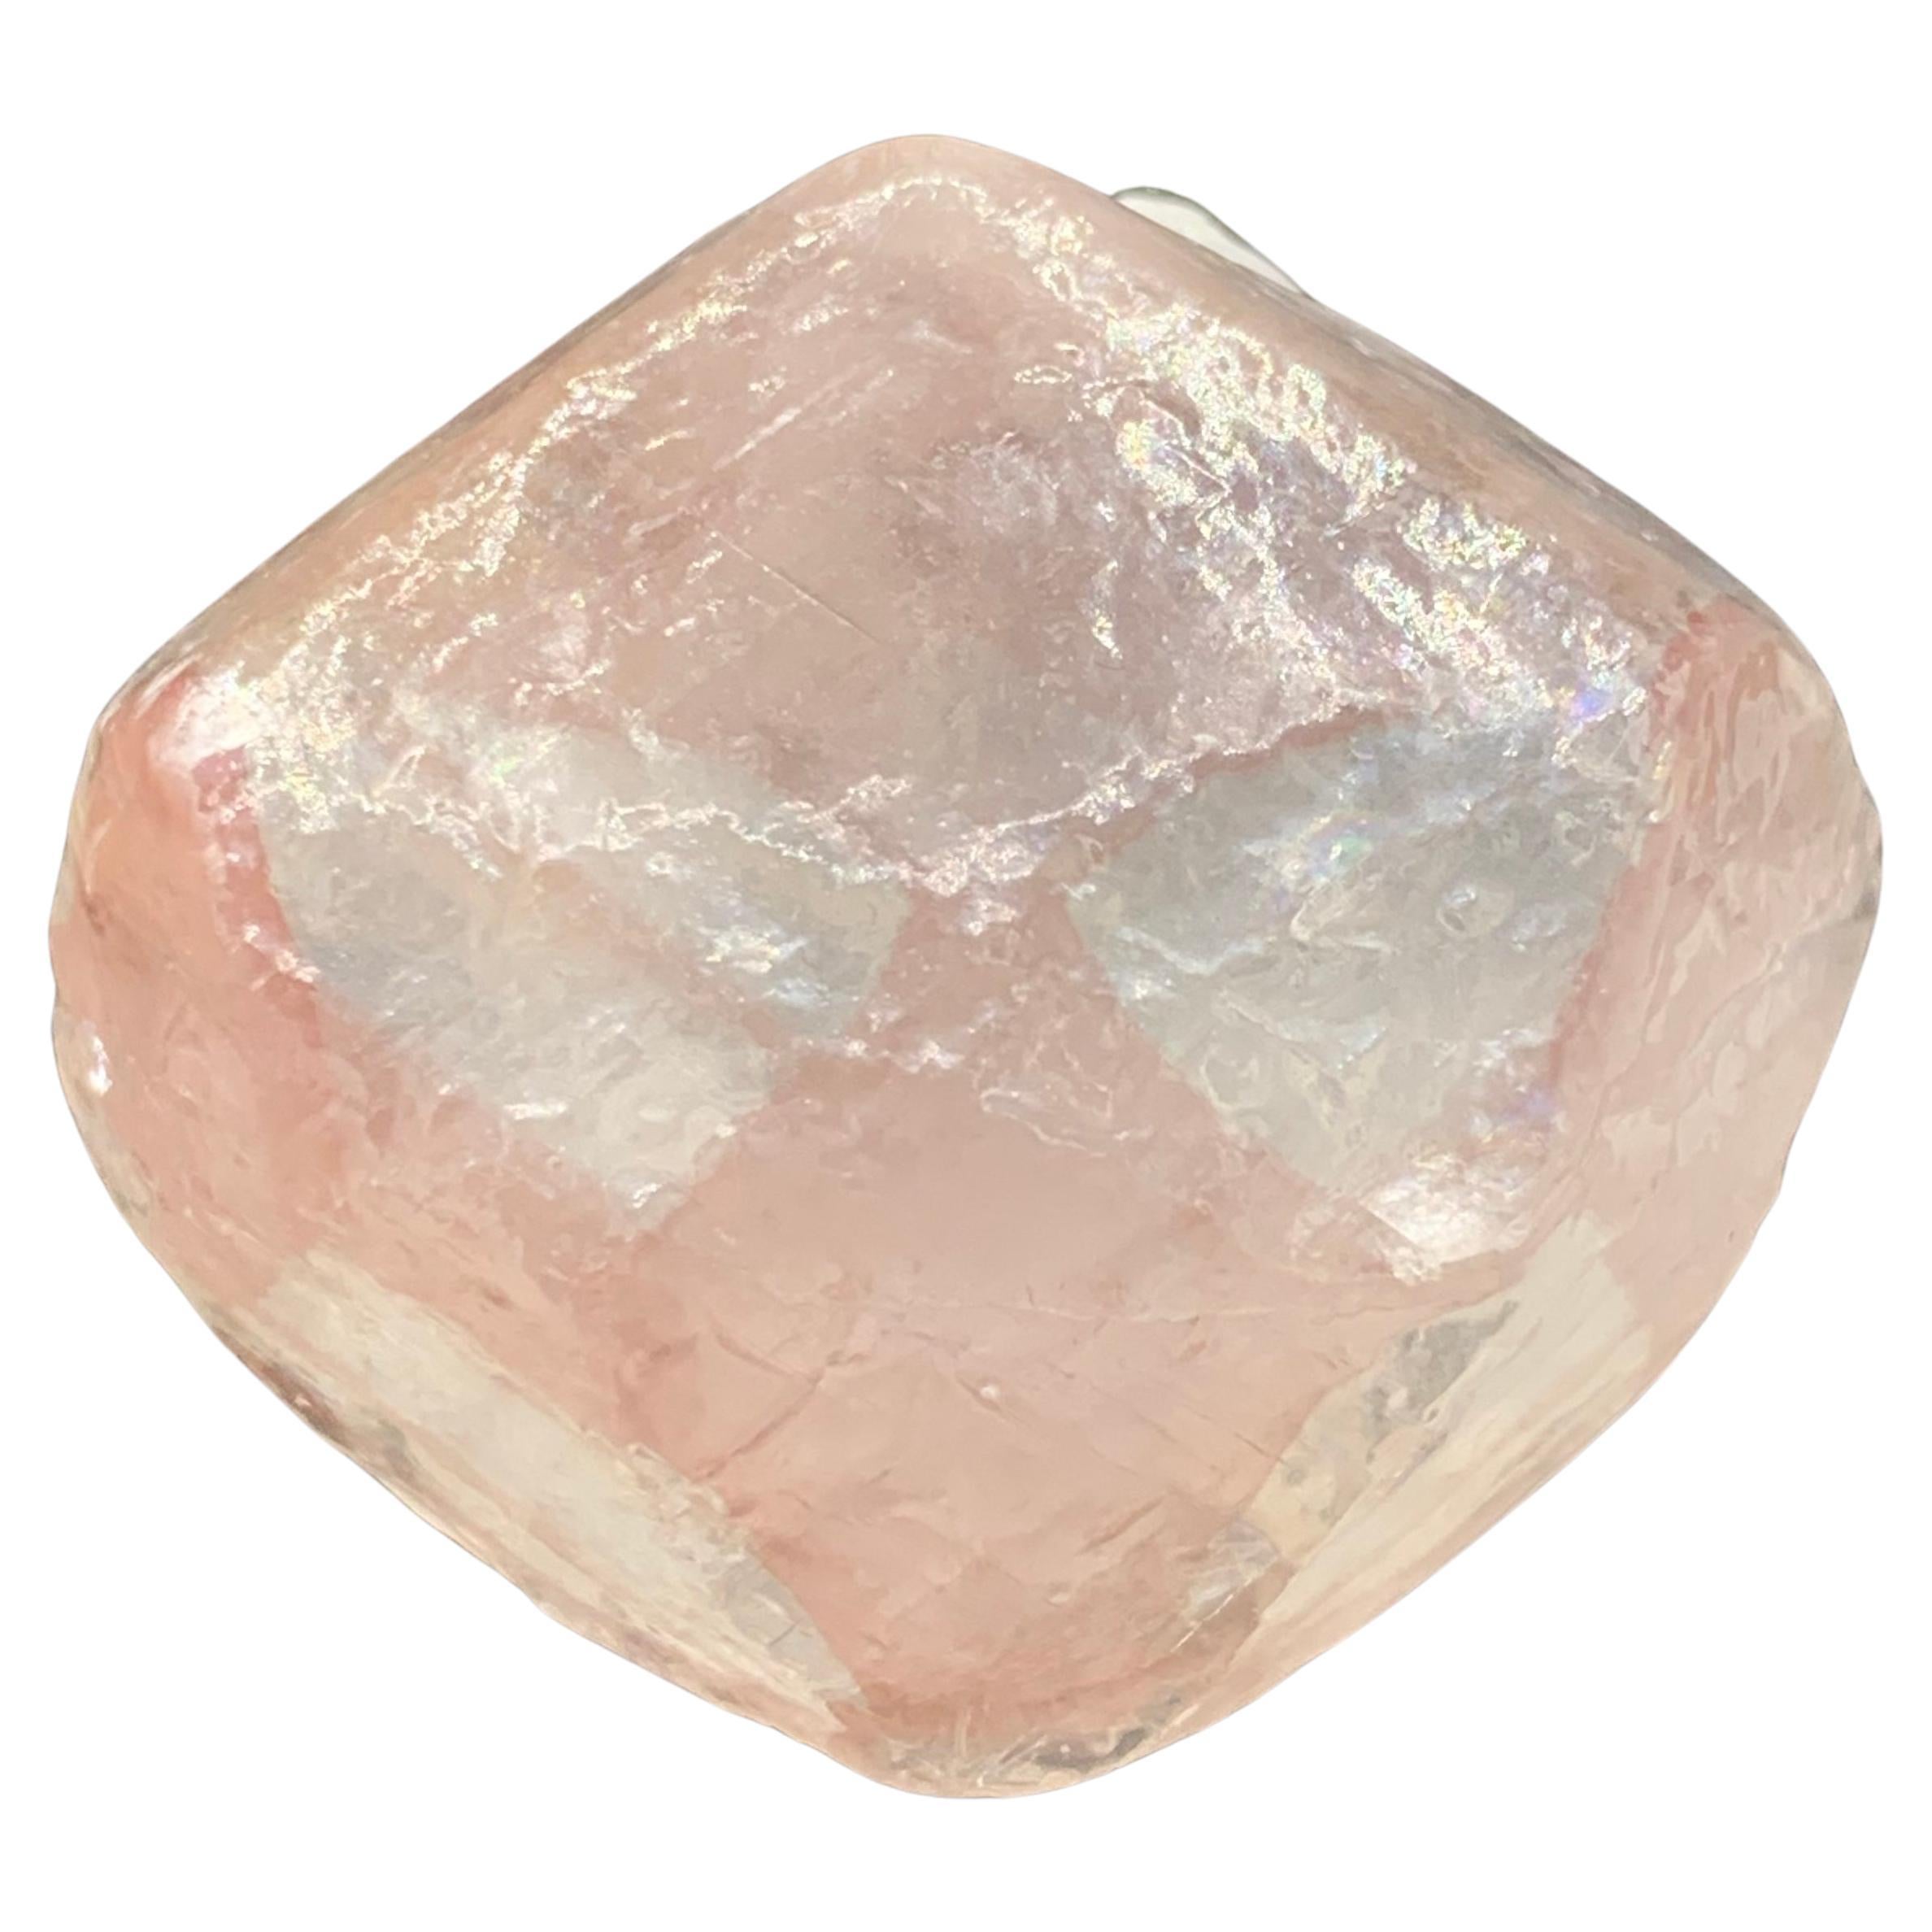 34.04 Gram Adorable Spider Eye Calcite Crystal From Balochistan, Pakistan 